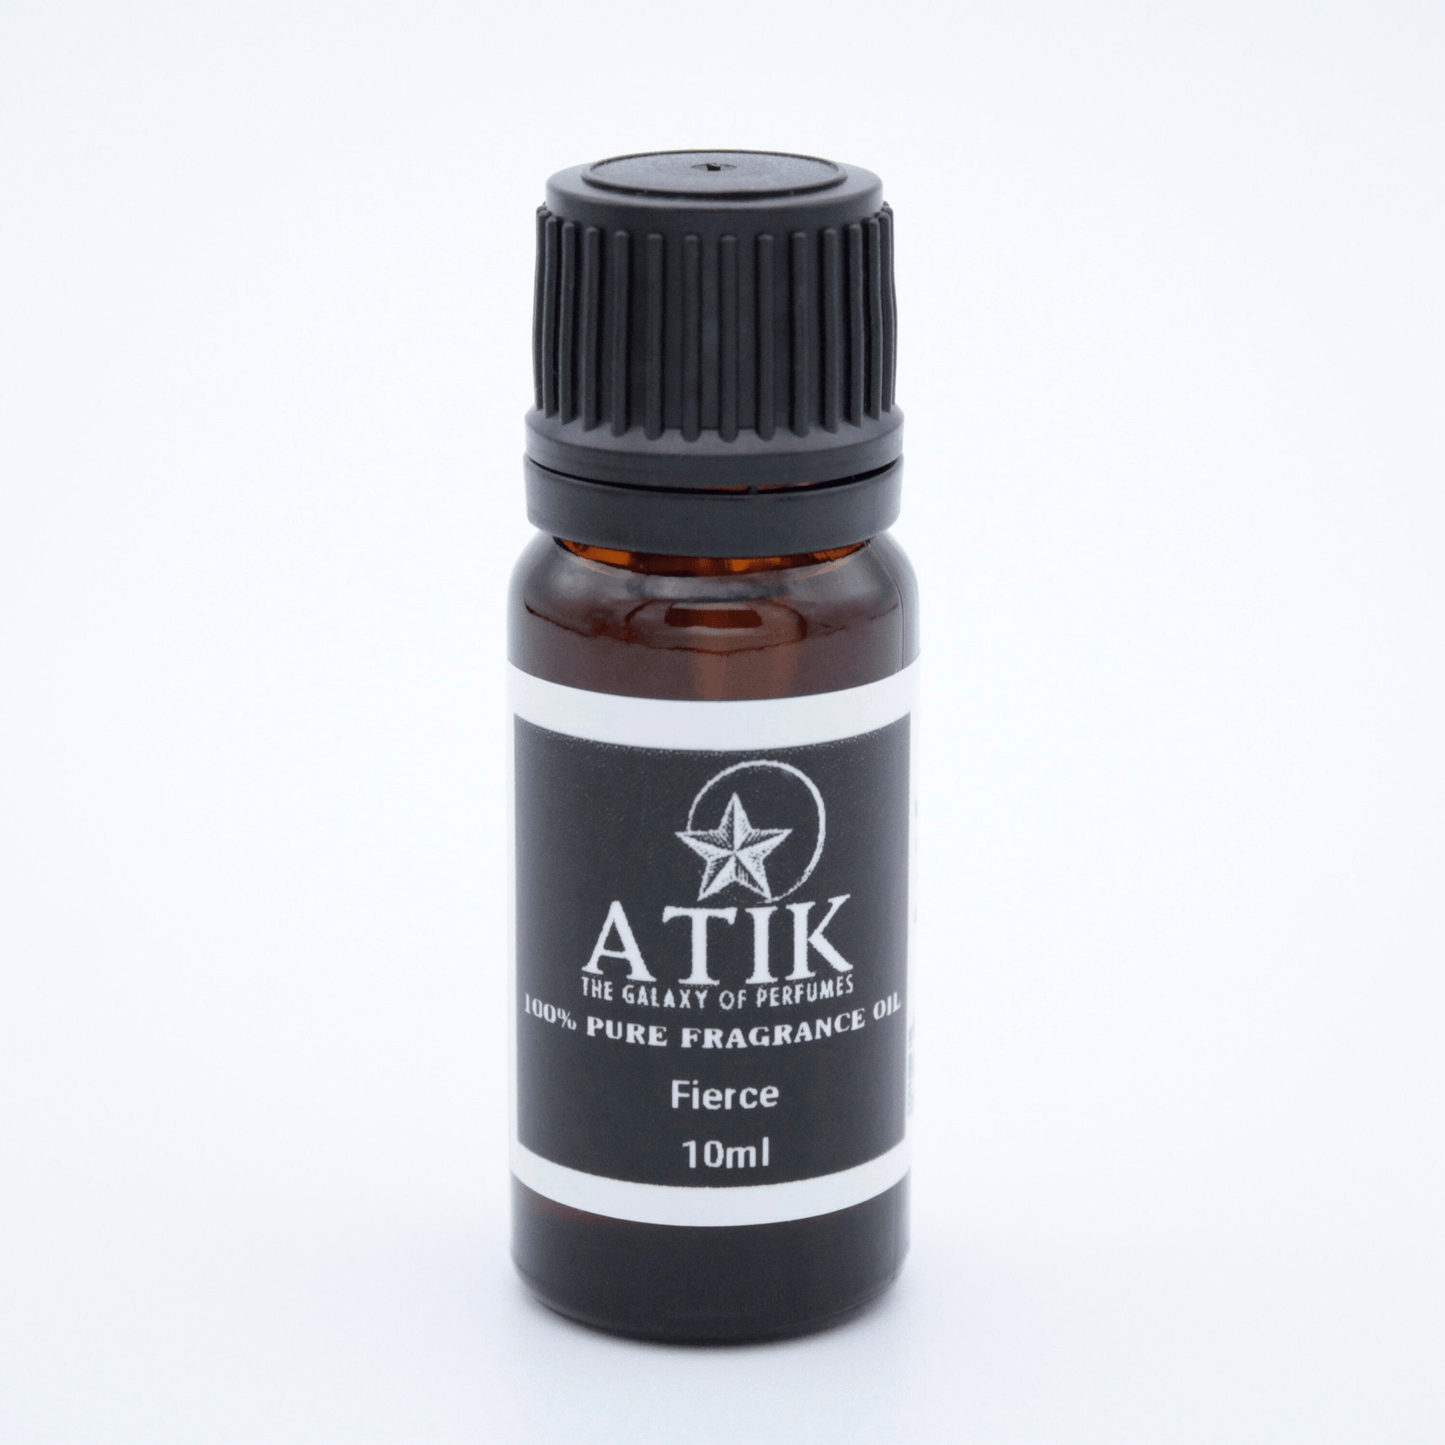 Fierce fragrance oil - Atik Perfumes